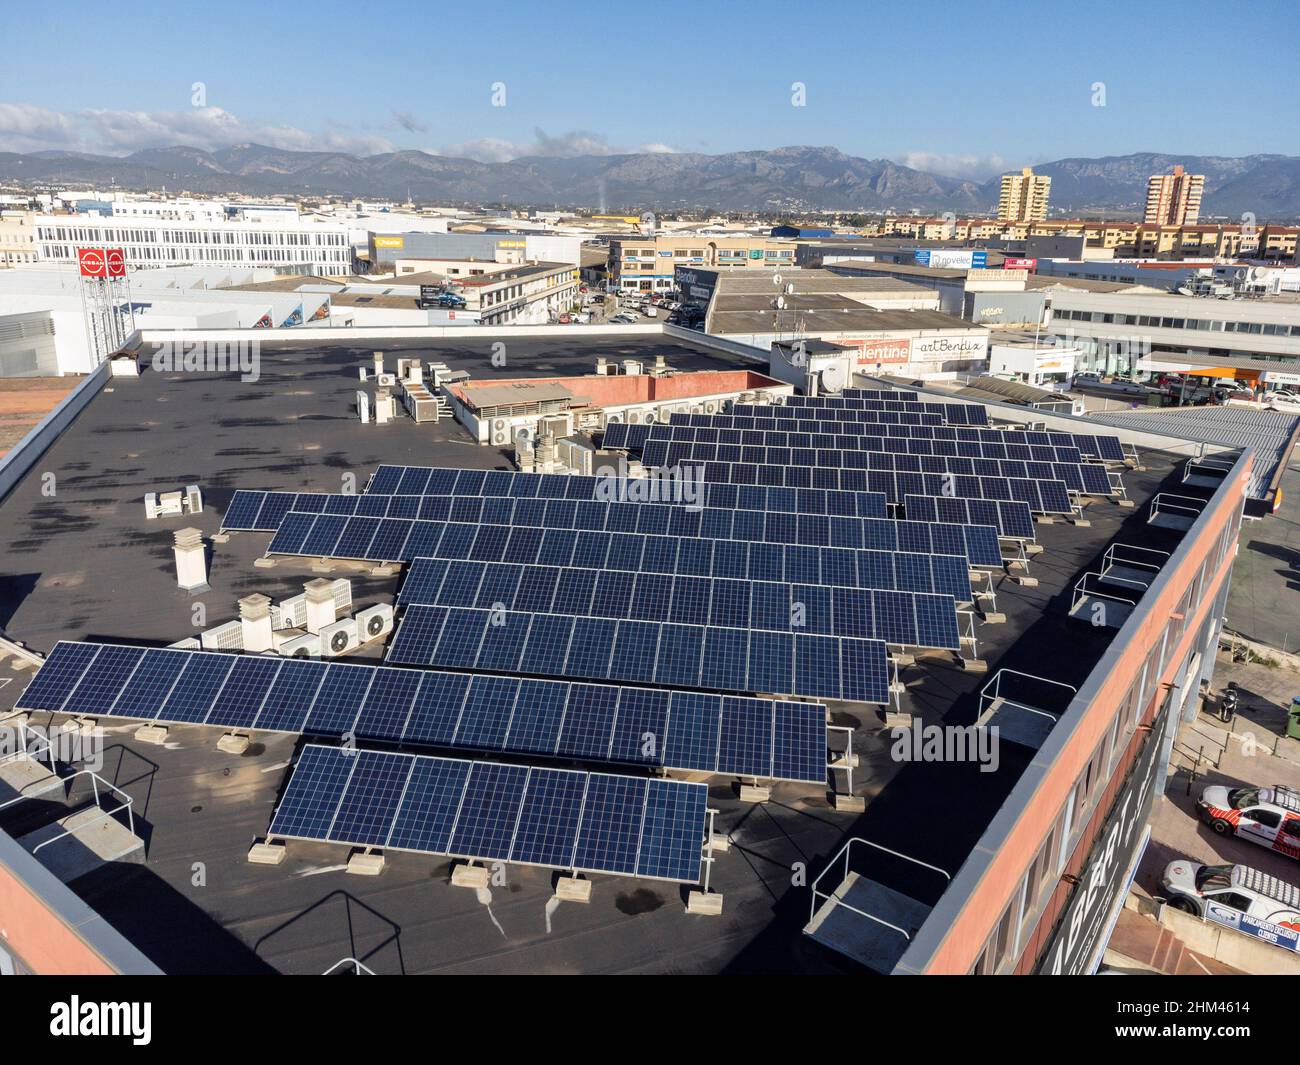 Fábrica con paneles solares en el techo, polígono industrial Son Castelló,  Palma, Mallorca, Islas Baleares, España Fotografía de stock - Alamy